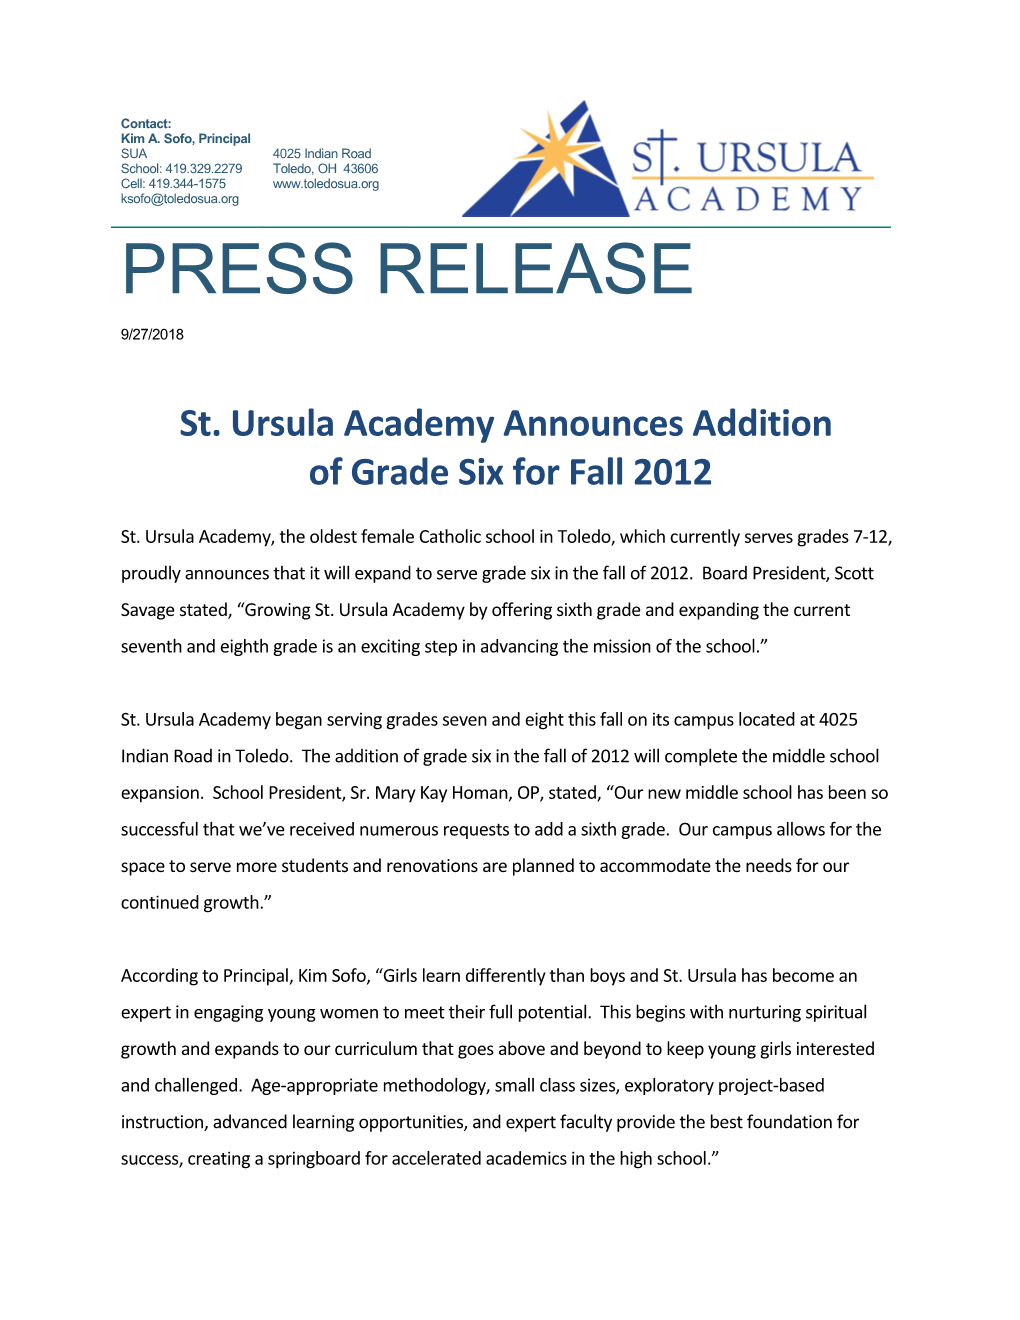 St. Ursula Academy Announces Addition